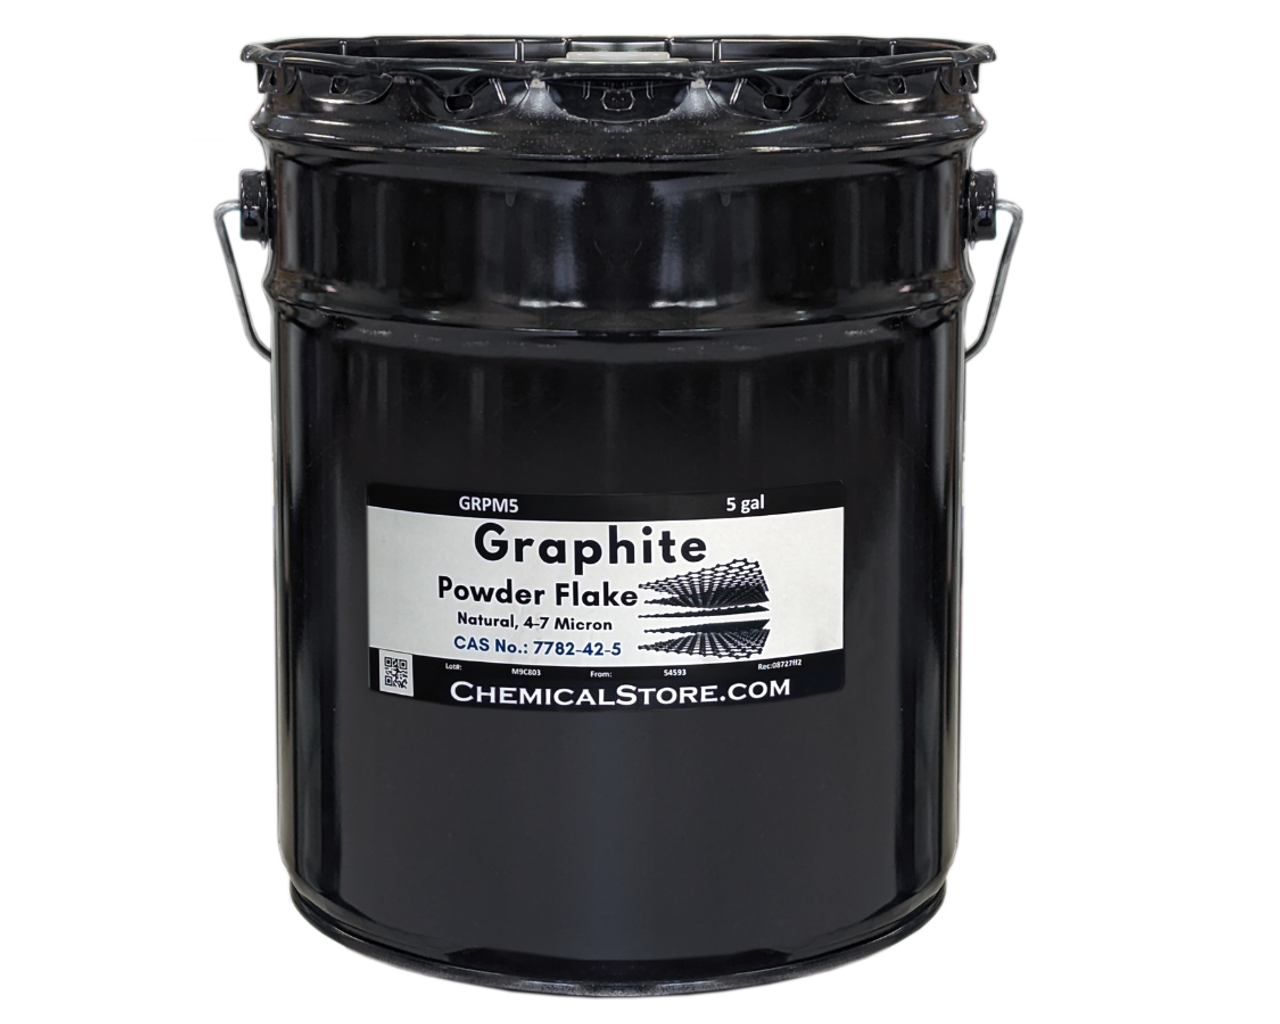 Graphite Powder, Natural, Flake, 5 gallons 